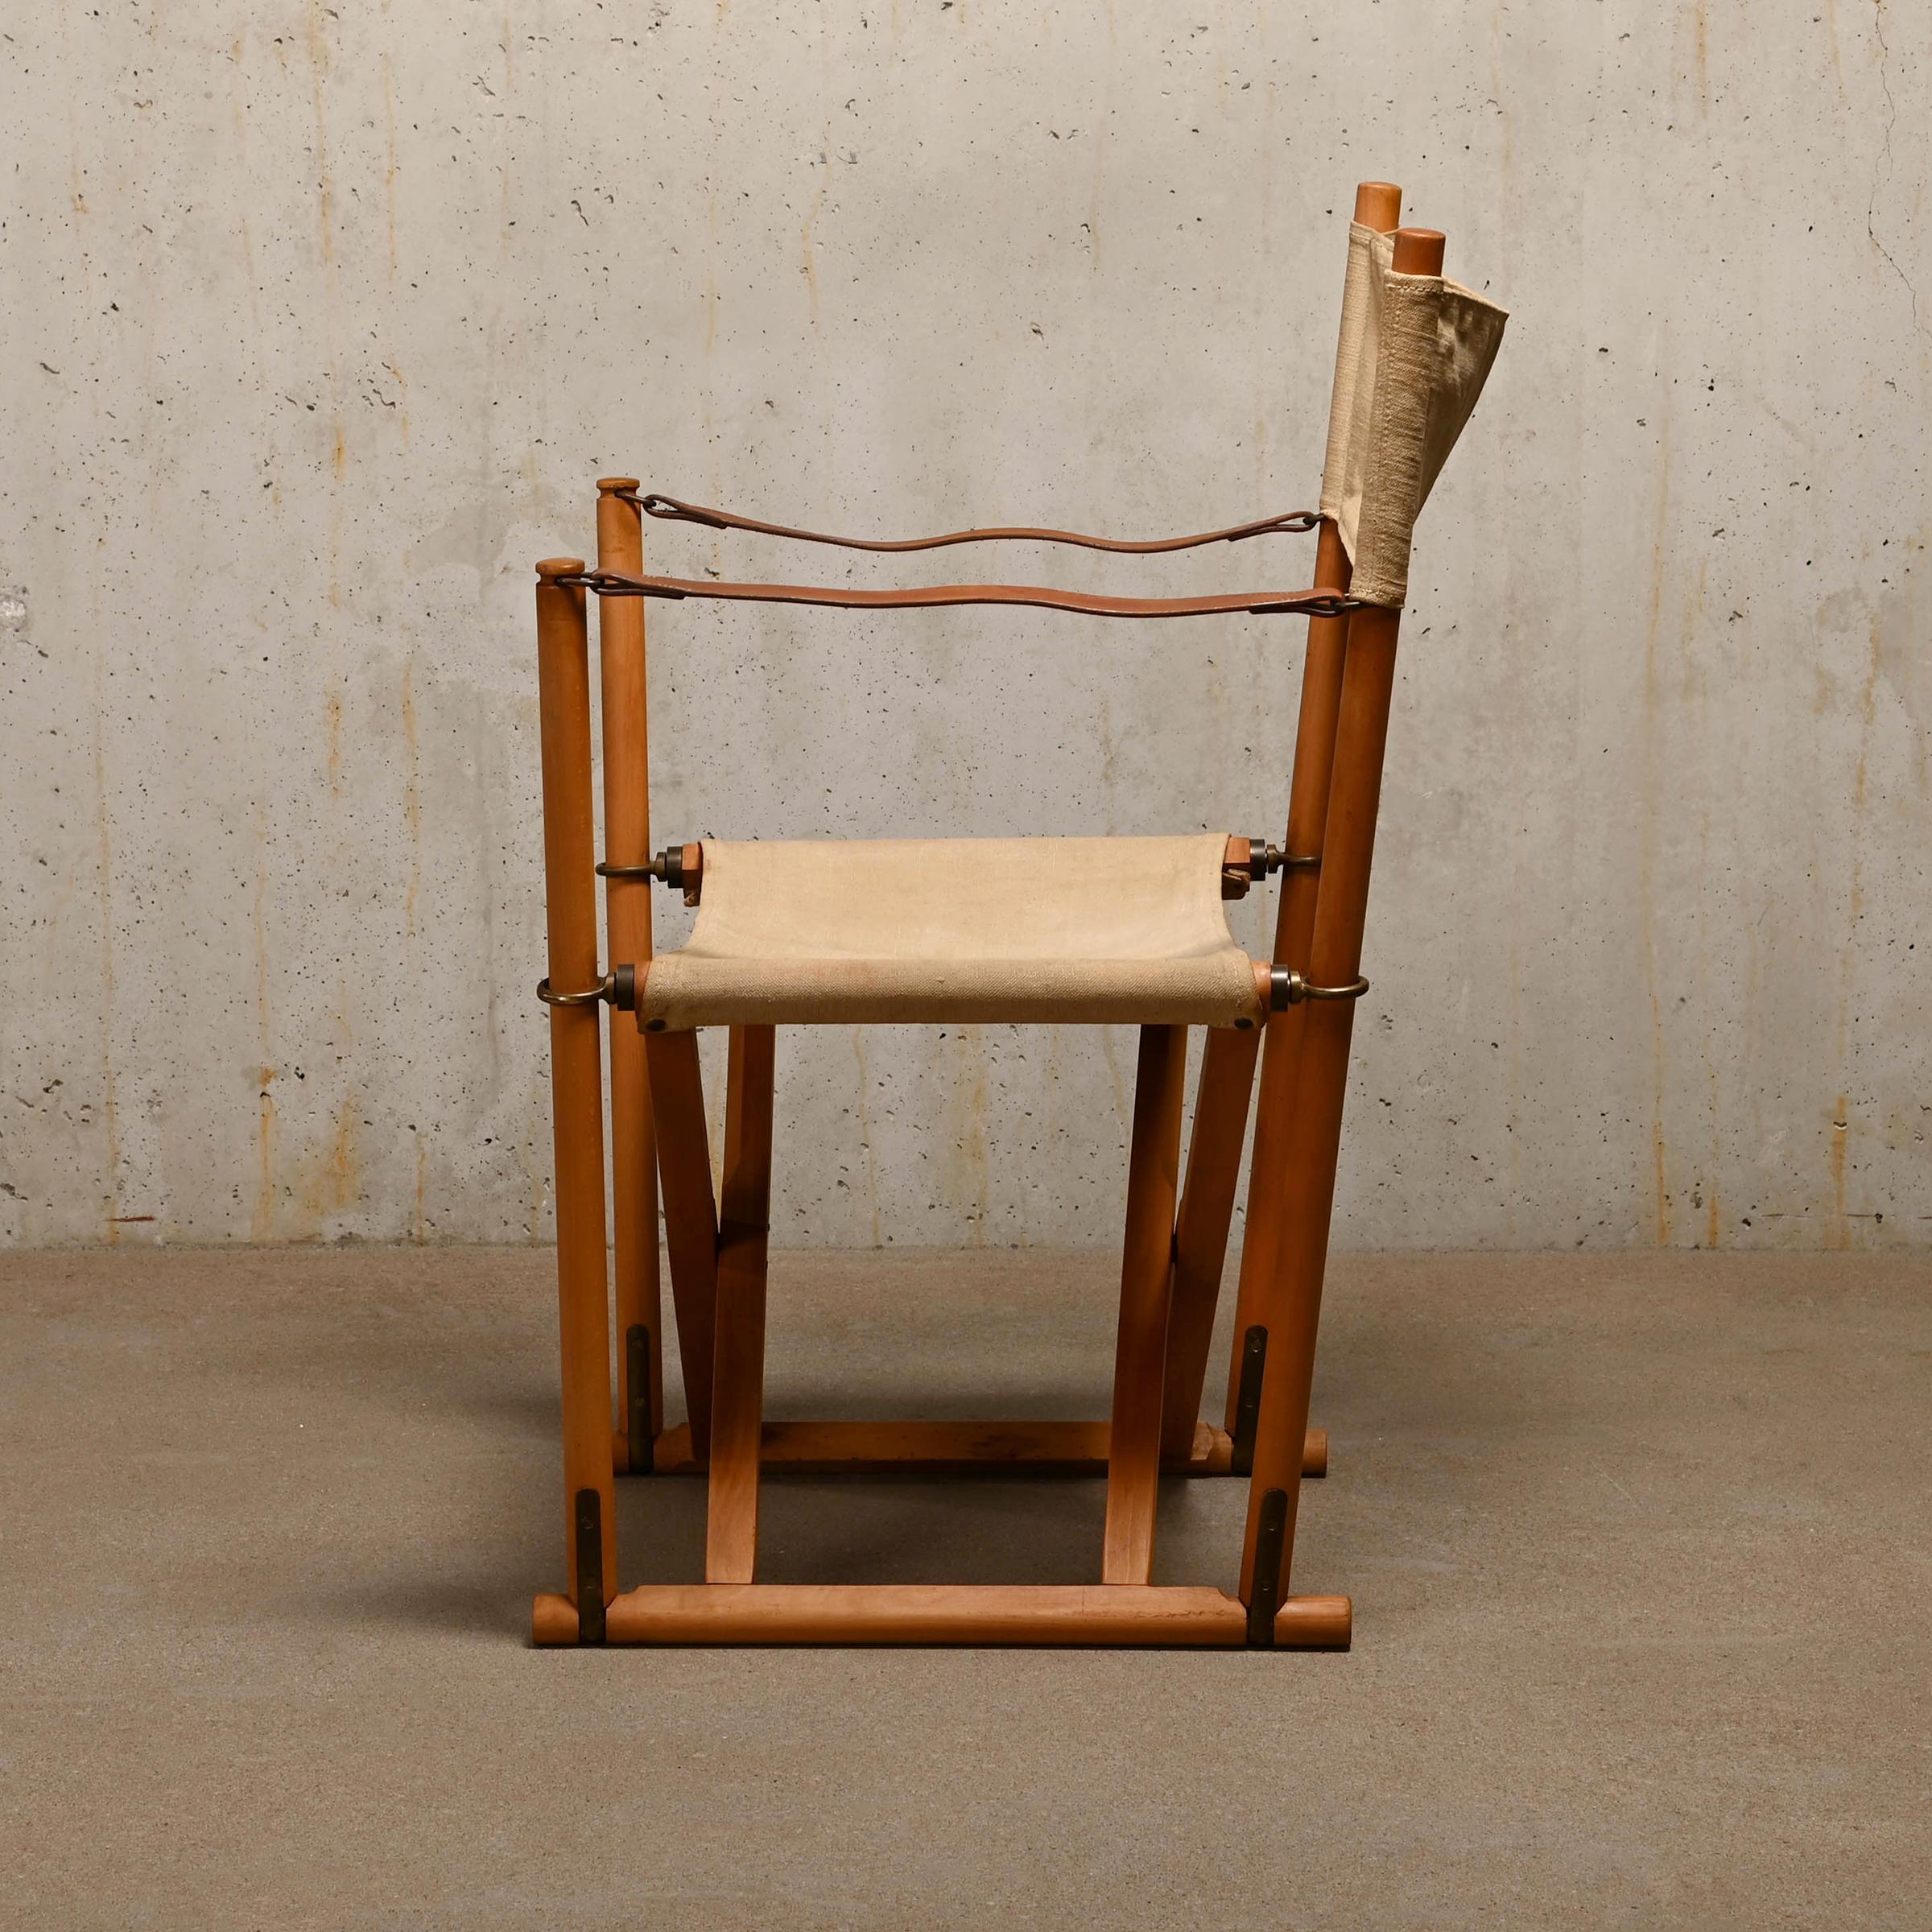 Mid-20th Century Mogens Koch MK16 Folding Chair in Beech Wood and Canvas for Interna, Denmark